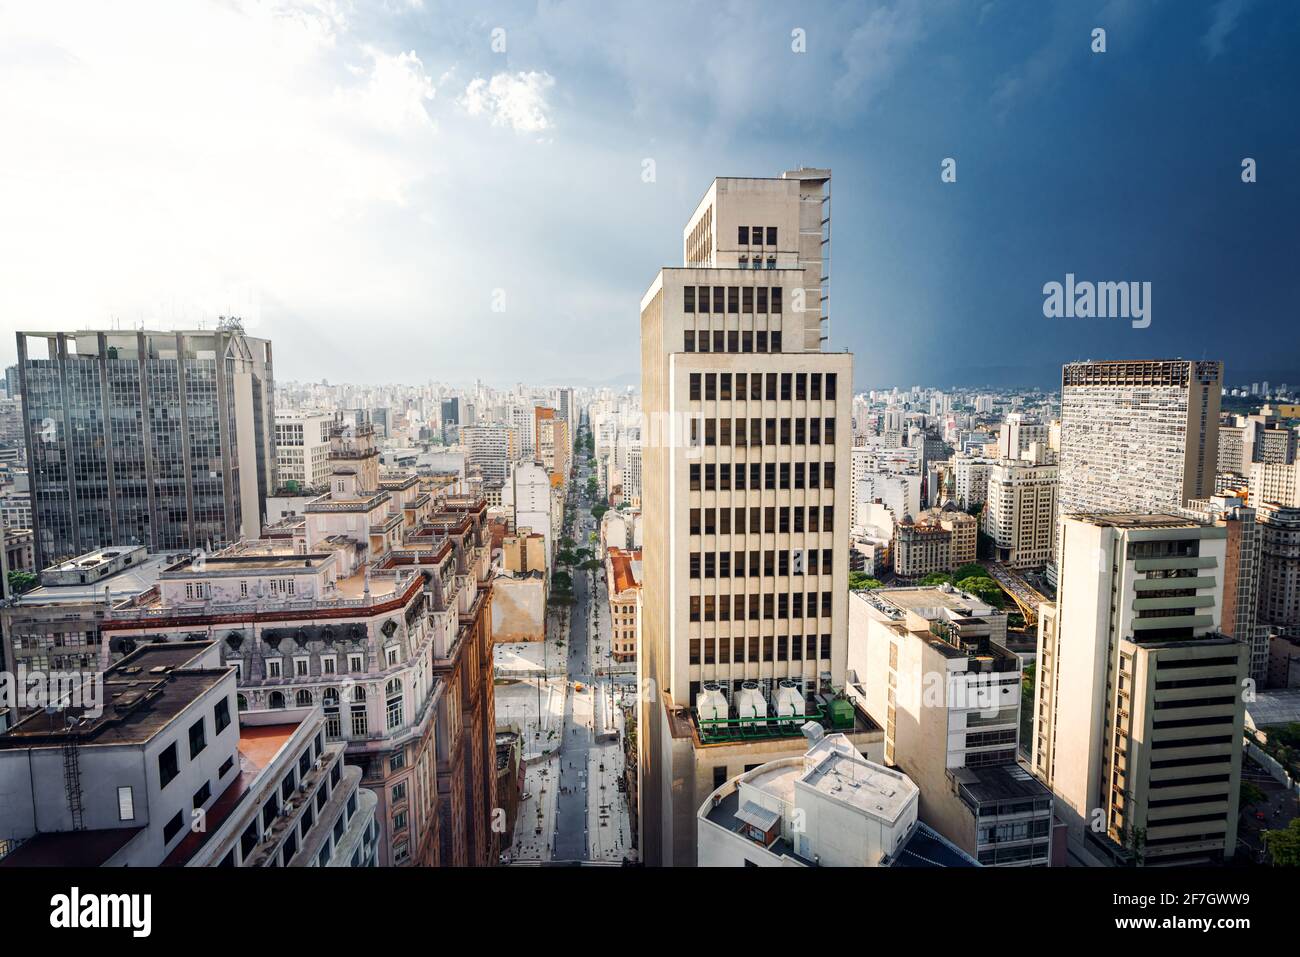 Luftaufnahme der Innenstadt von Sao Paulo und Sao Joao Avenue - Sao Paulo, Brasilien Stockfoto